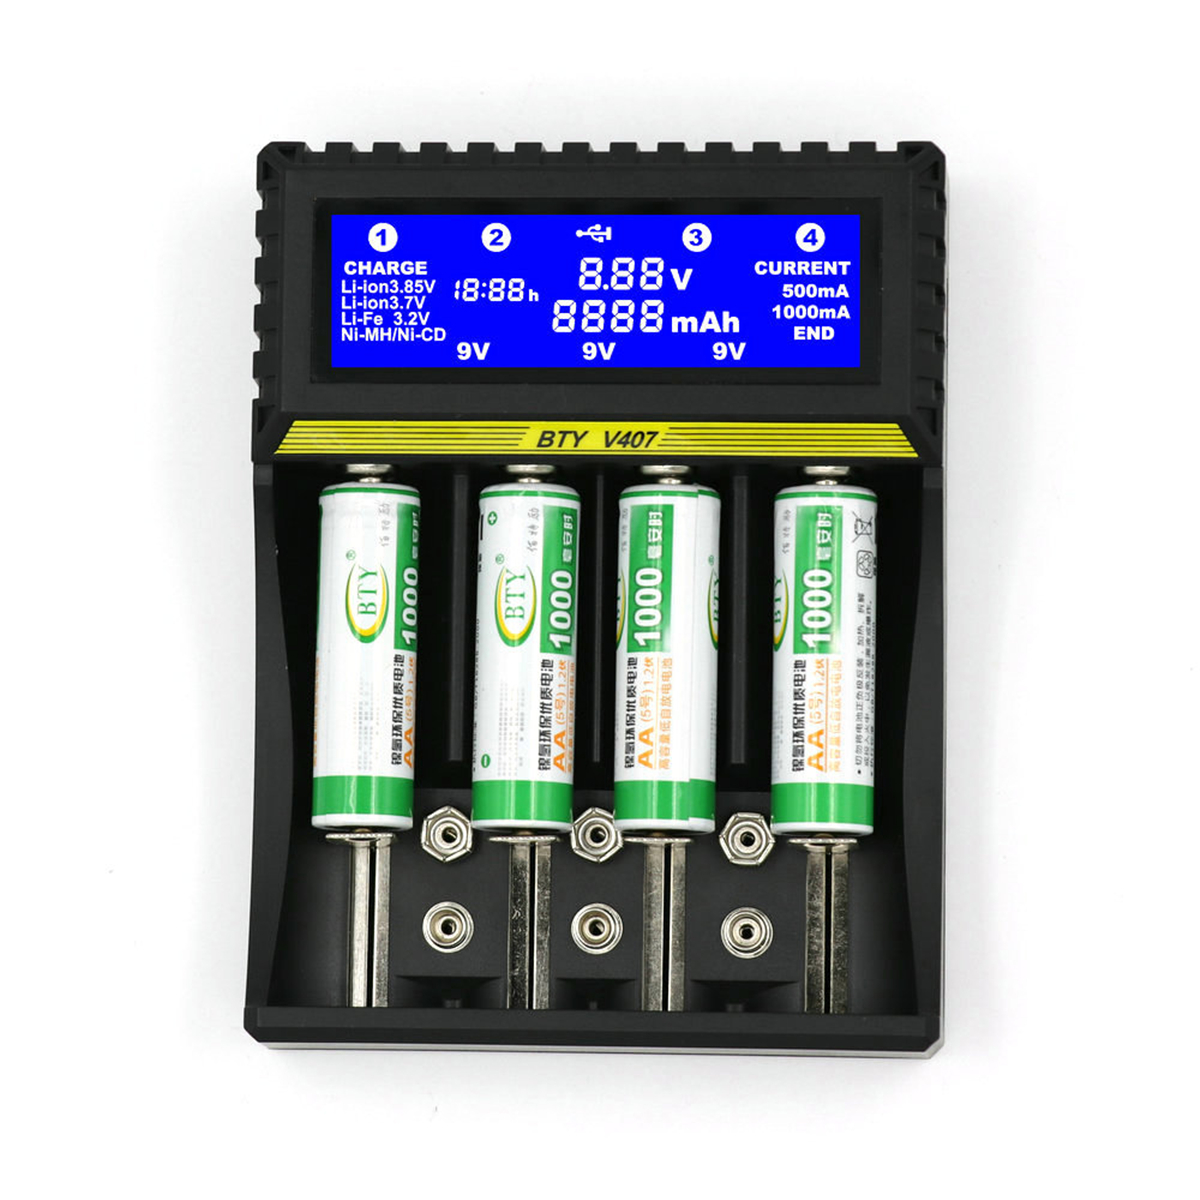 

Universal Smart LCD Charger Multifuncation Lithium Battery Charger For 9V AA AAA Ni-MH Ni-CD 18650 Li-ion Battery Charger lot